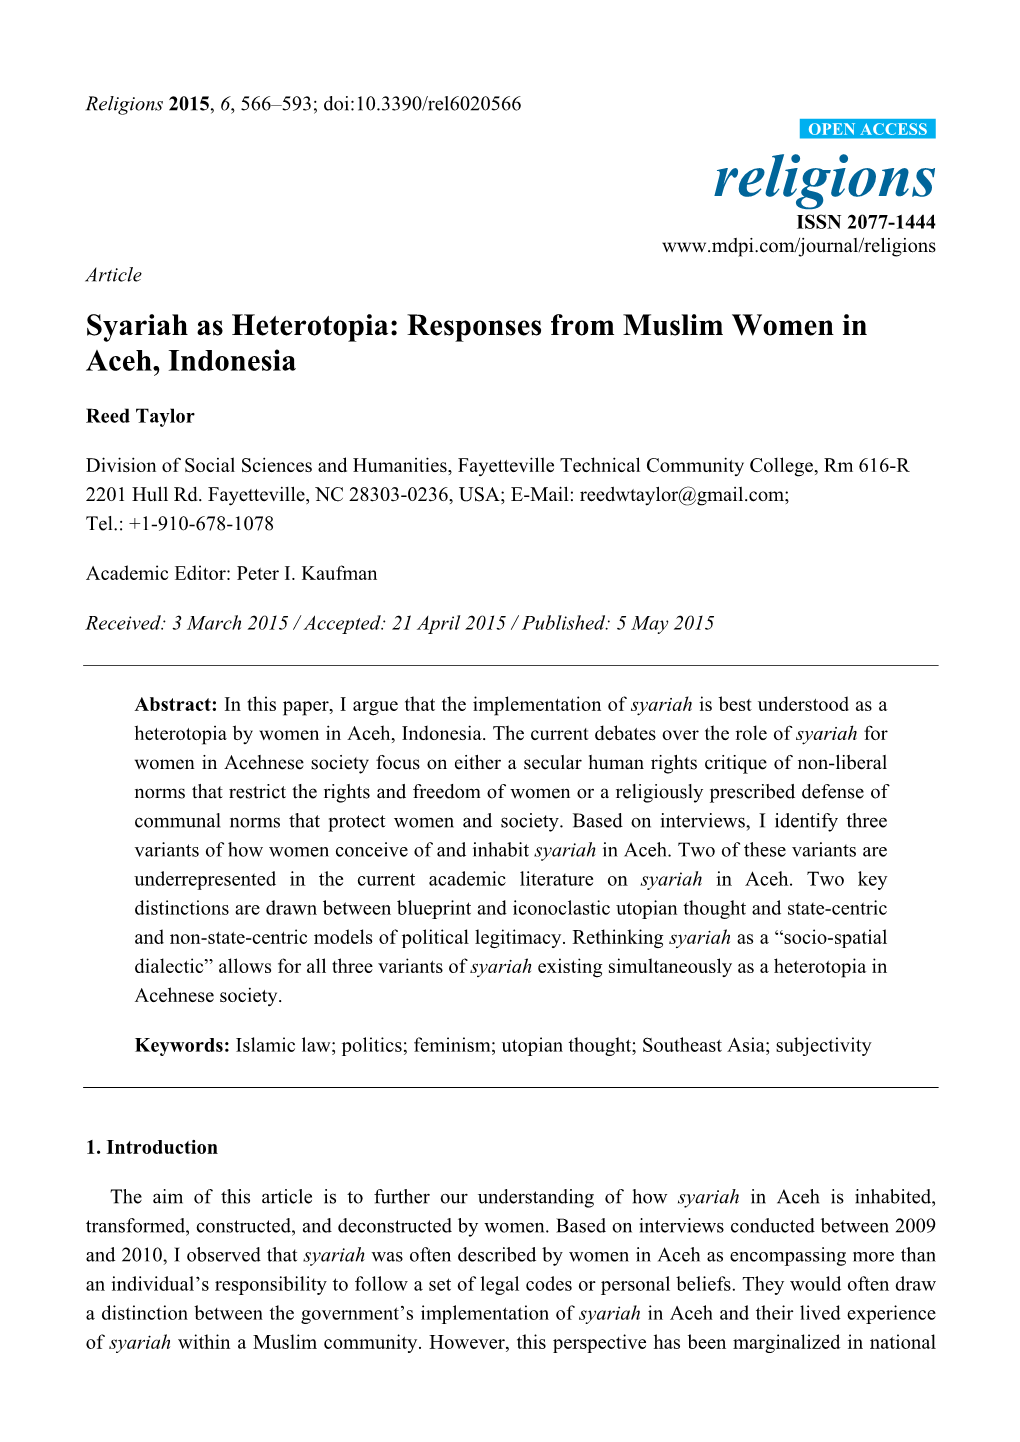 Syariah As Heterotopia: Responses from Muslim Women in Aceh, Indonesia